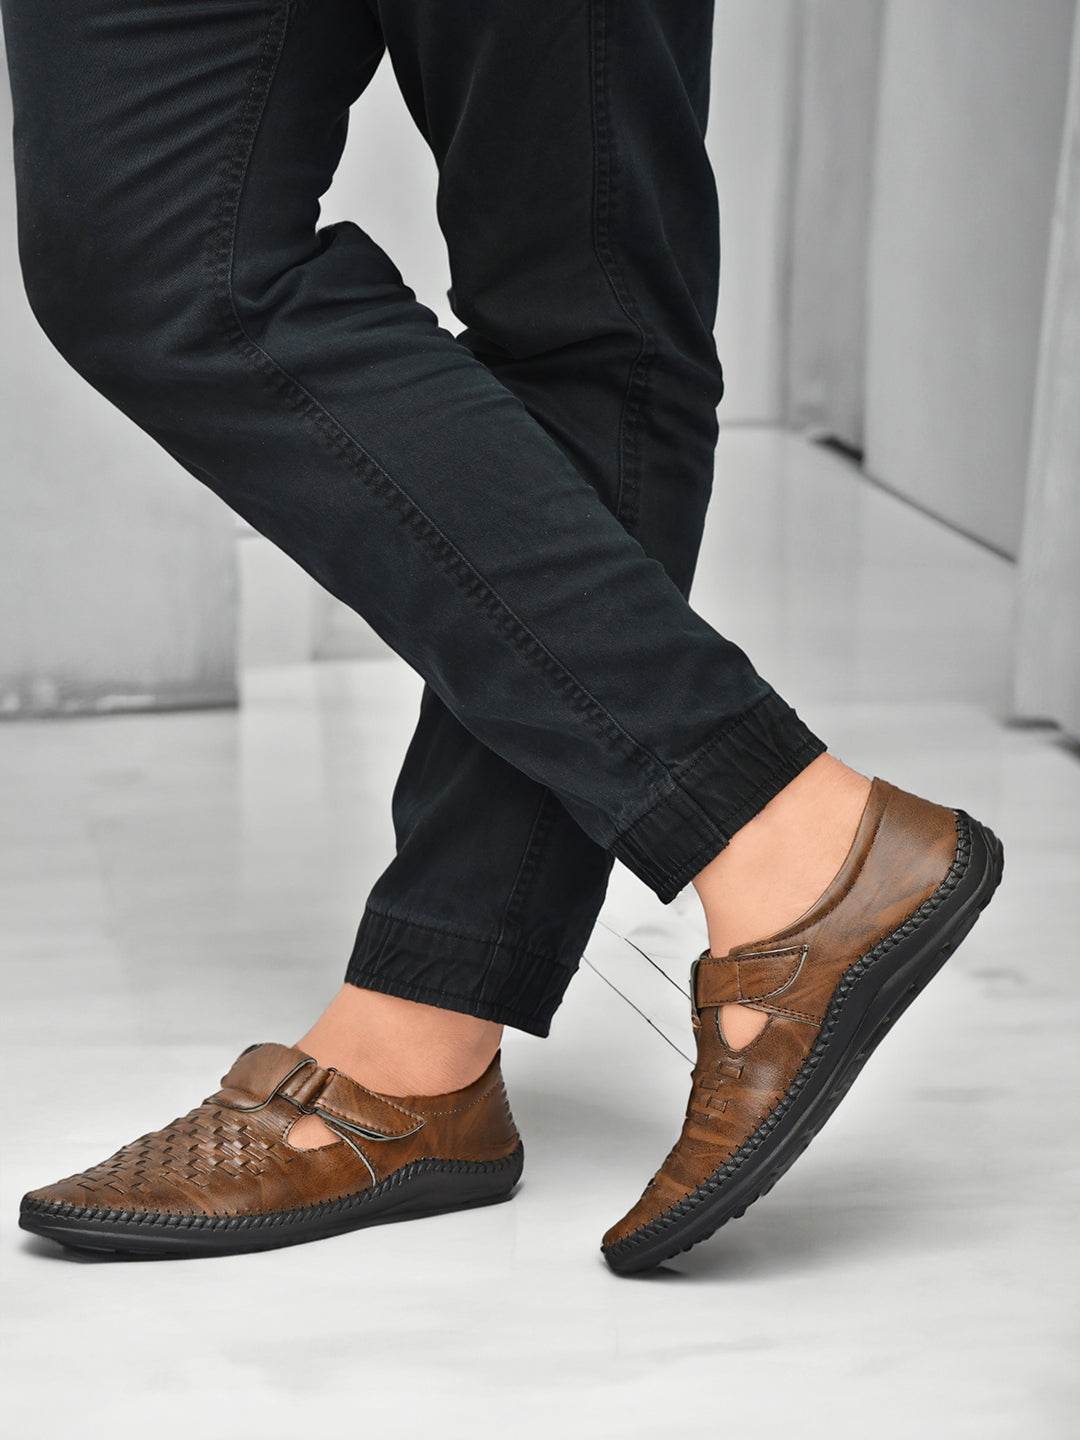 Classic Roman Sandals for Men - 4009